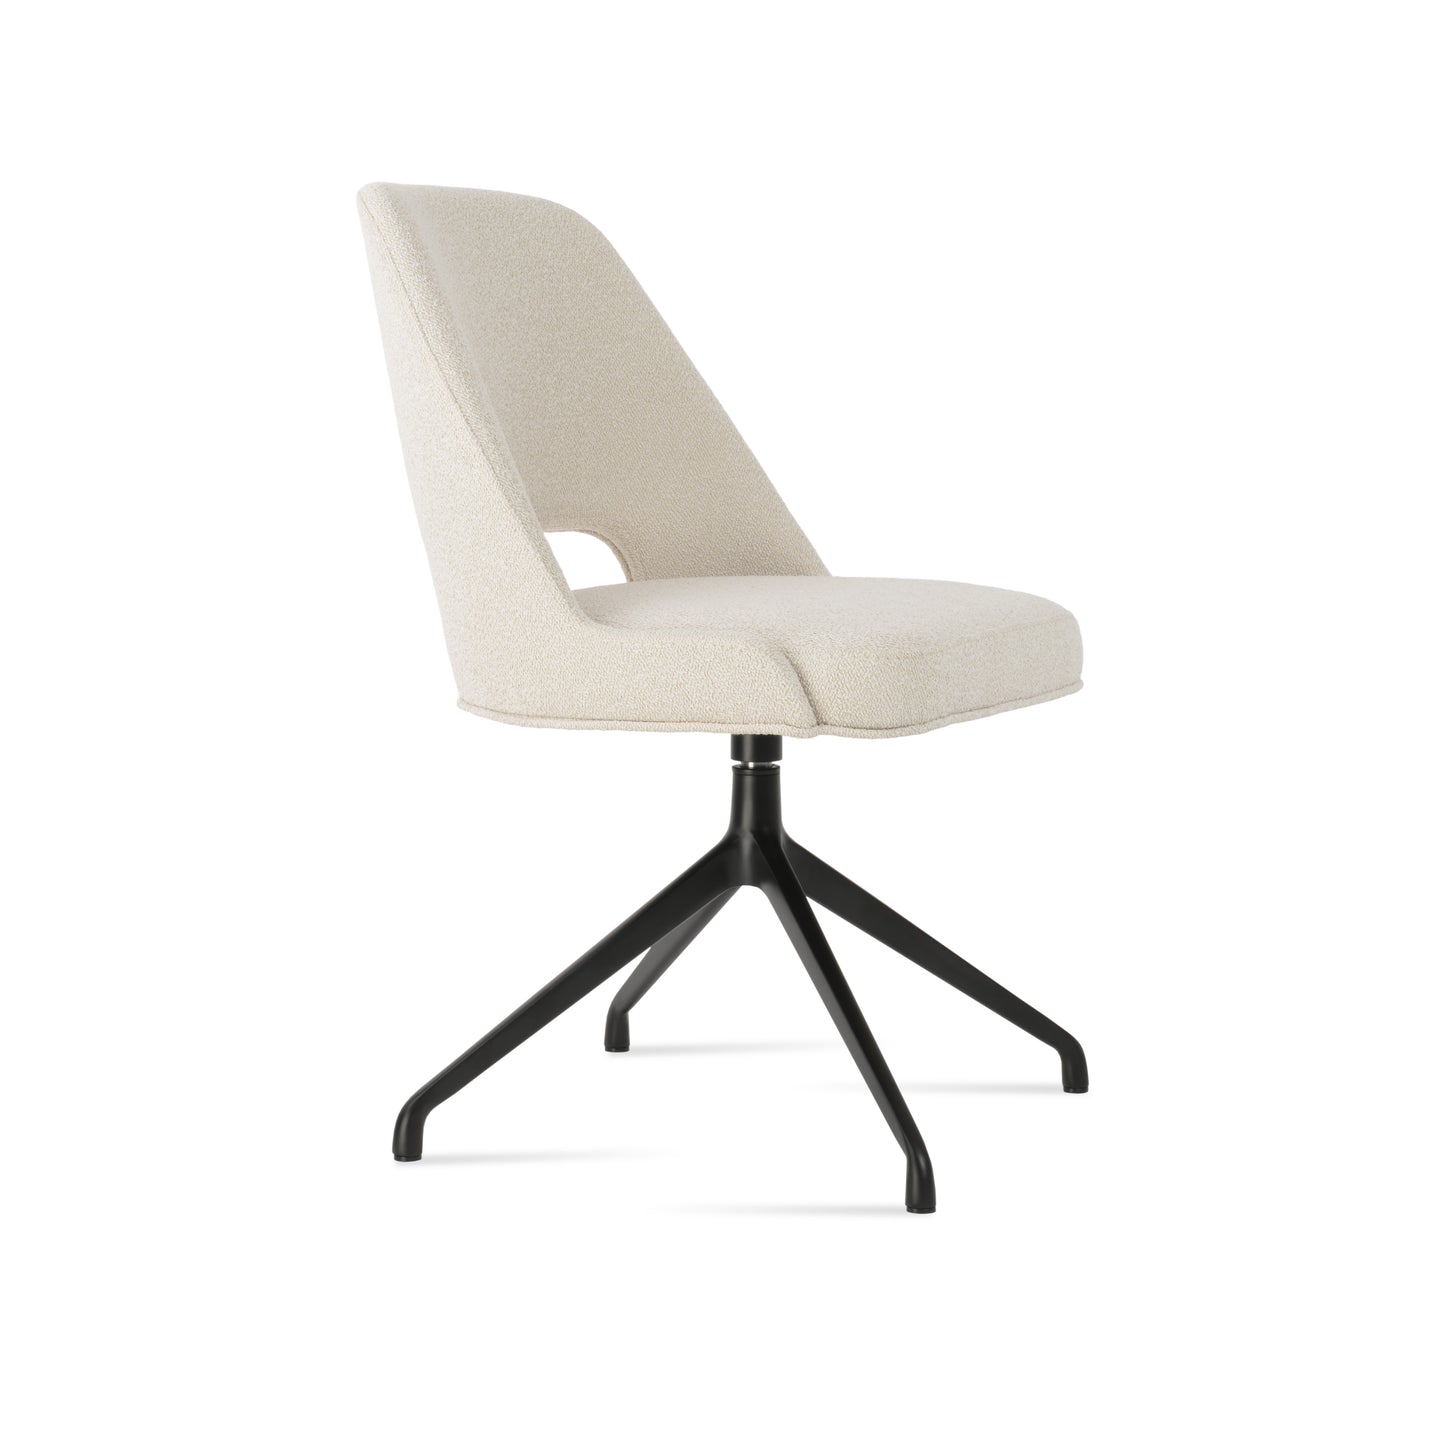 Elegant Marash Chair for Contemporary Spaces